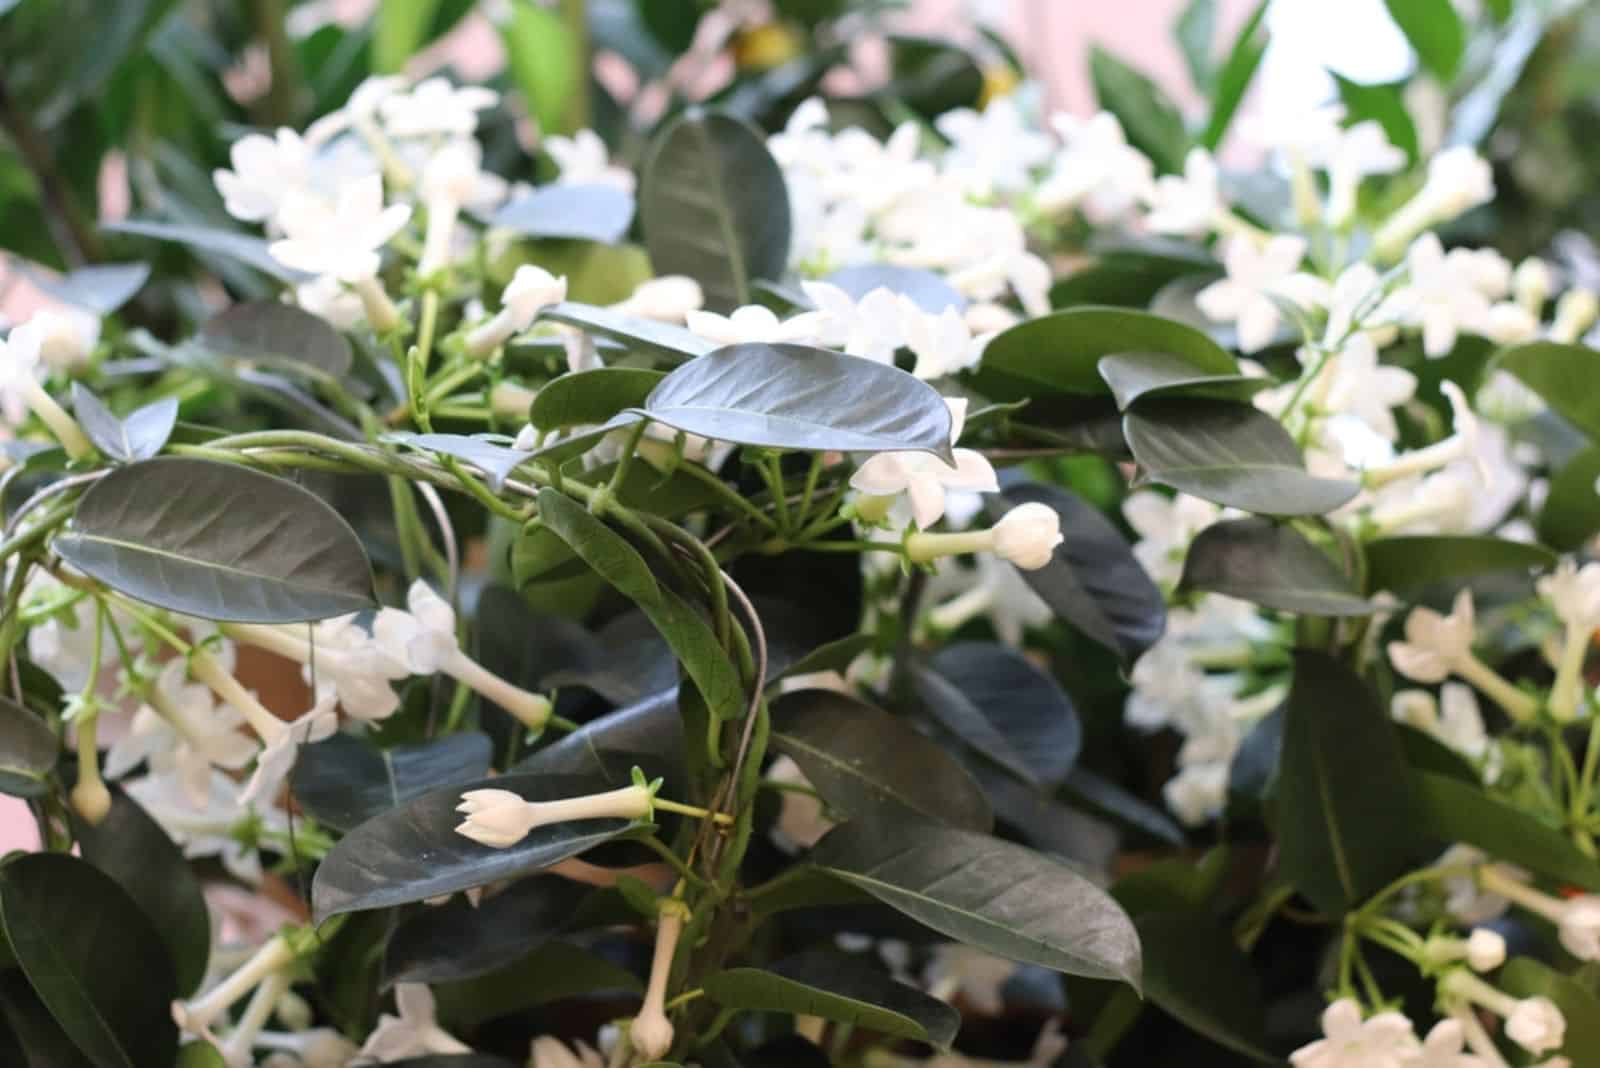 Madagascar jasmine or stephanotis with flowers